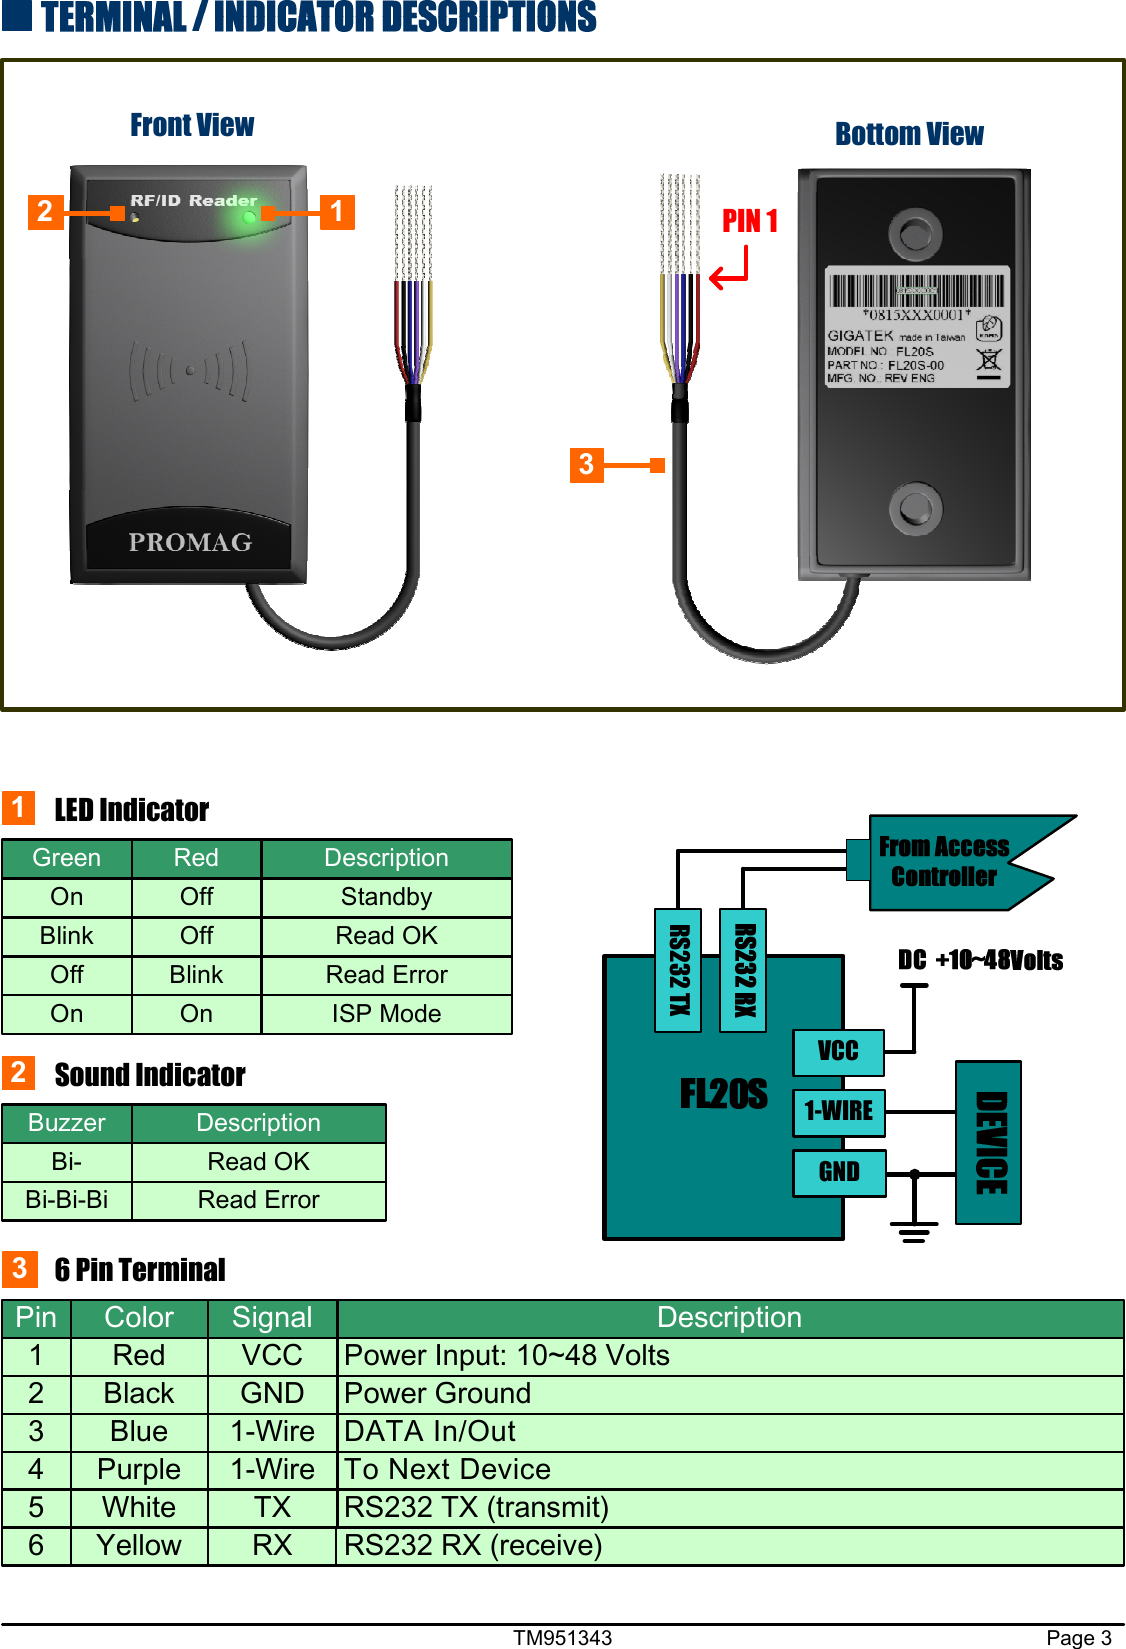 LED Indicator1OffOffBlinkRedOnBlinkOffGreenStandbyRead OKRead ErrorDescription12345Pin6 Pin Terminal36Power Input: 10~48 VoltsPower GroundDATA In/OutTo Next DeviceDescriptionRS232 TX (transmit)PurpleBlueBlackRedColorYellowWhite1-Wire1-WireGNDVCCSignalRXTXRS232 RX (receive)Sound Indicator2Bi-BuzzerRead OKDescriptionPage 313PIN 1TM9513432OnOn ISP ModeFront View Bottom ViewVCC1-WIREGNDRS232 TXBi-Bi-Bi Read Error